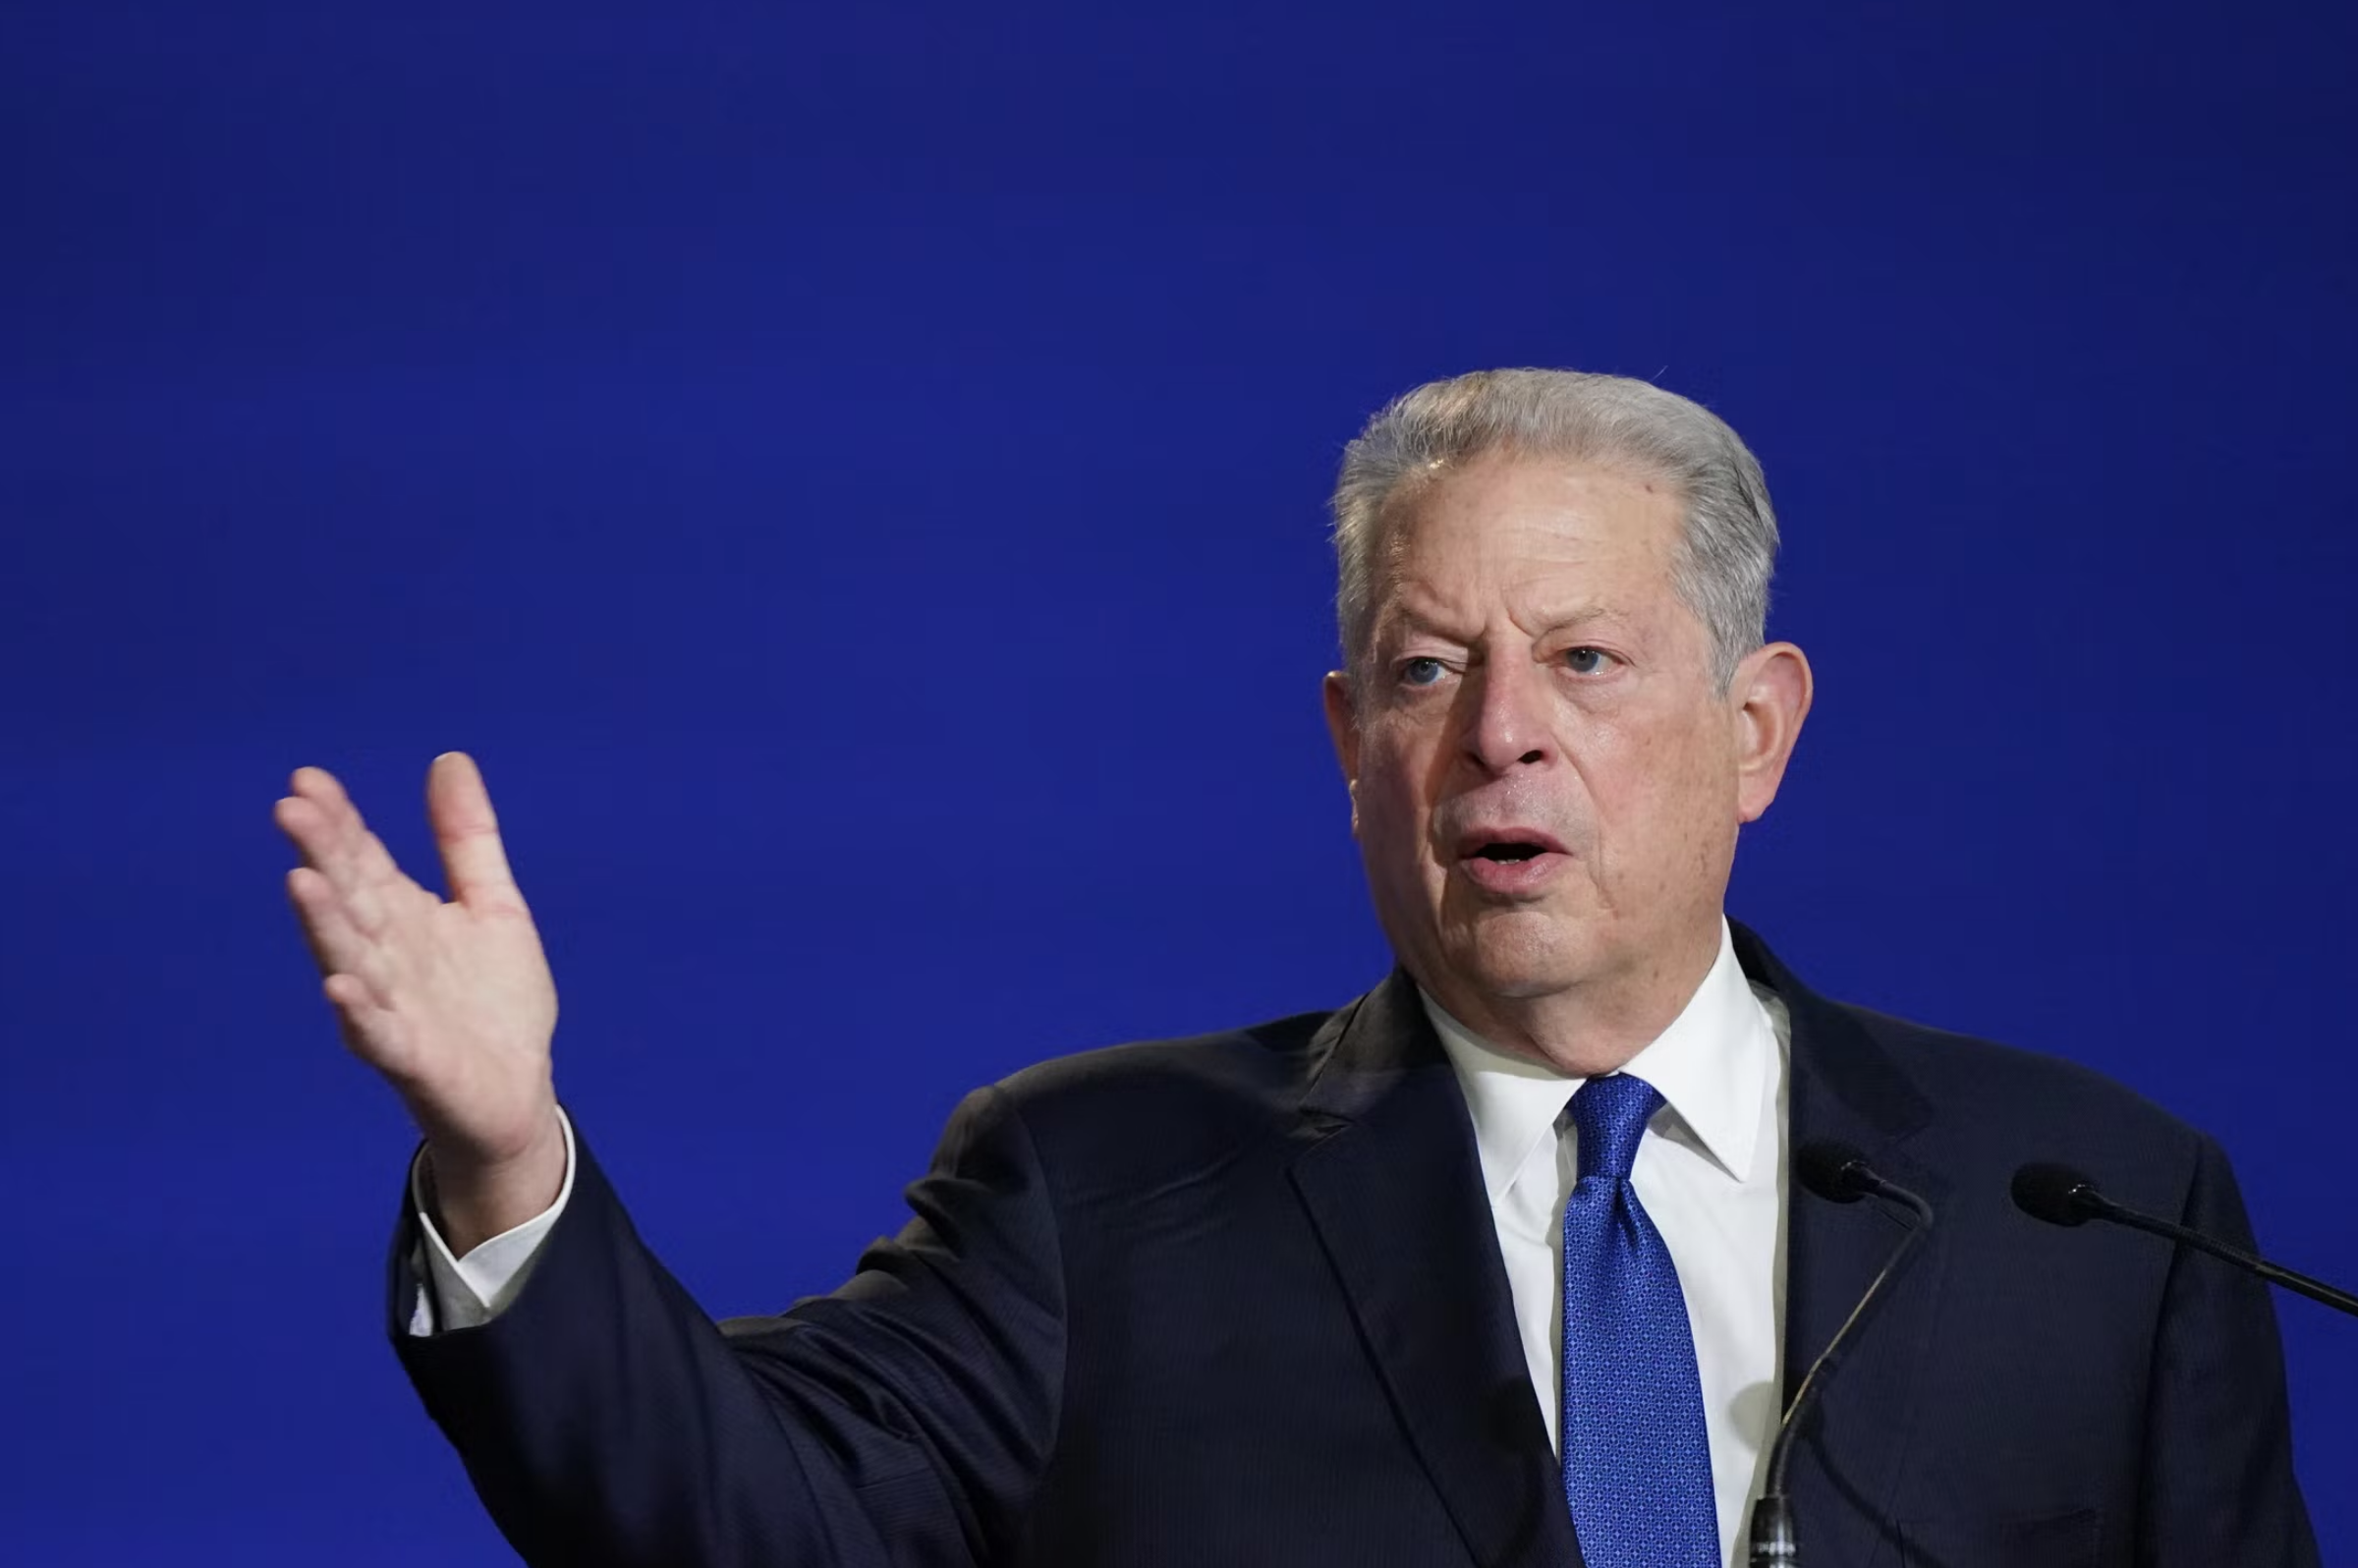 Al Gore giving a speech against a dark blue backdrop